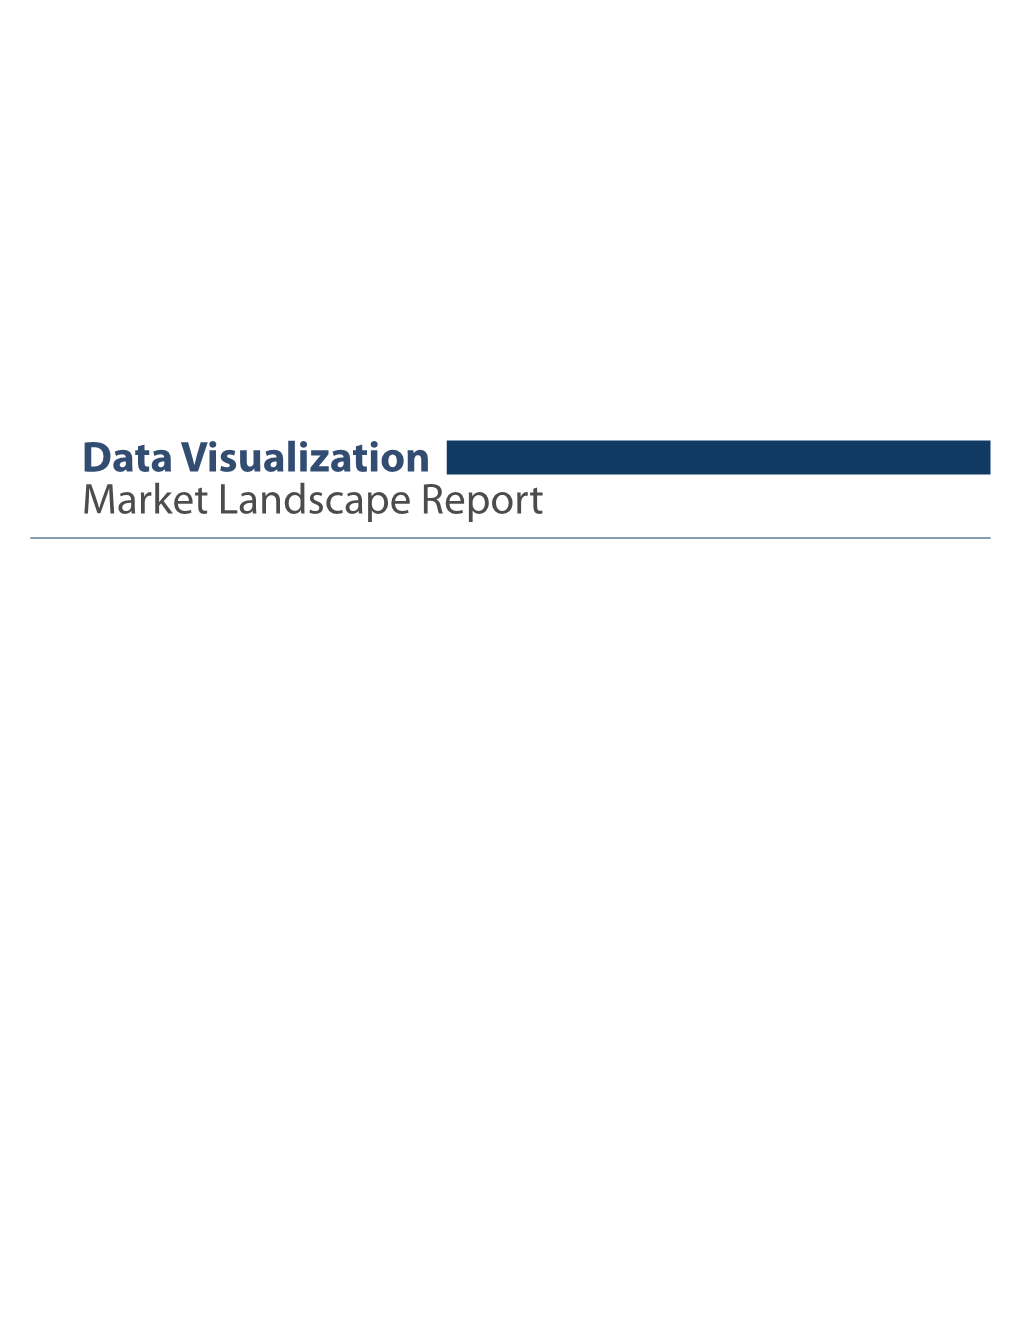 Data Visualization Market Landscape Report Data Visualization Market Landscape Report